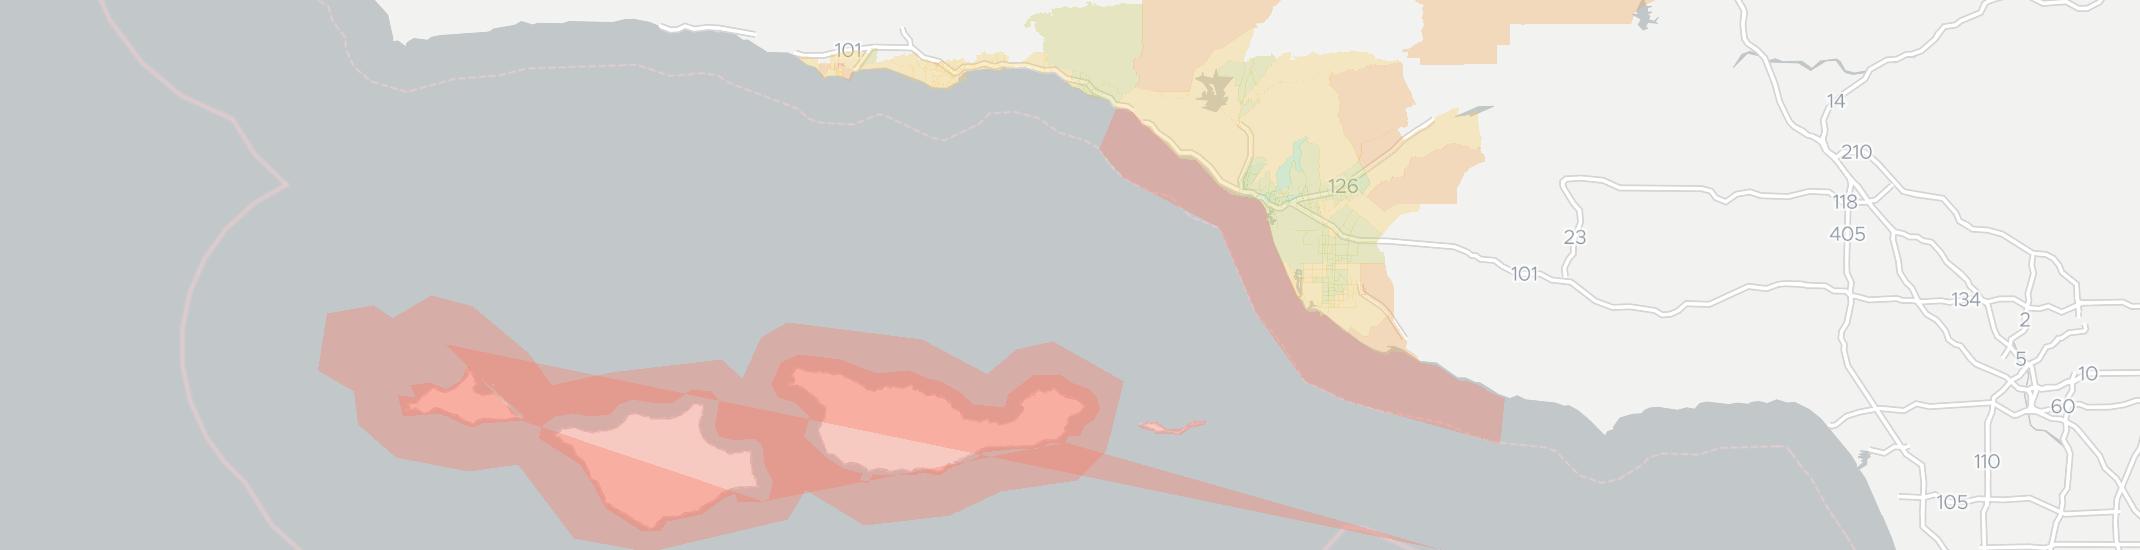 Ventura, CA Internet Providers (940 Mbps)